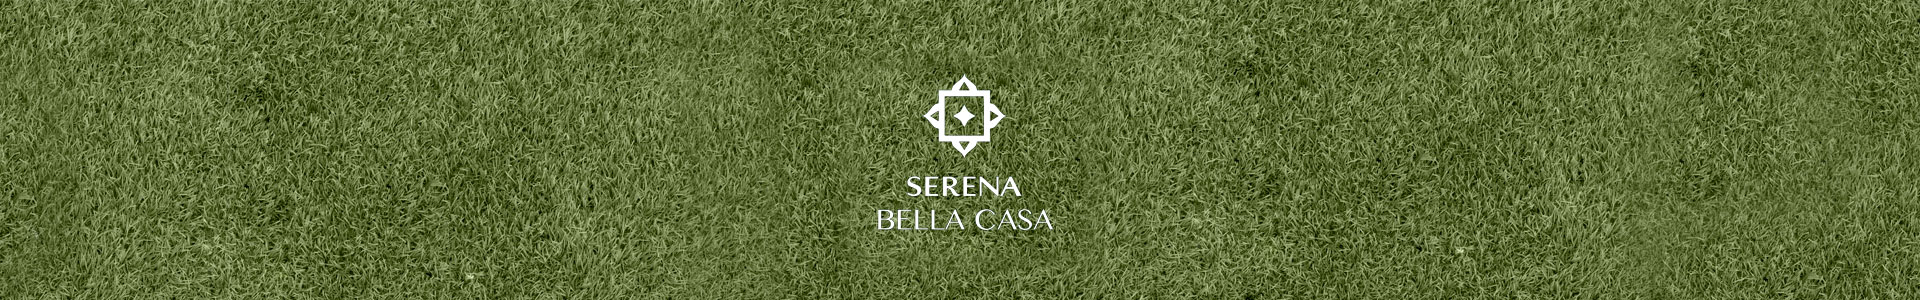 Serena Bella Casa Payment Plan